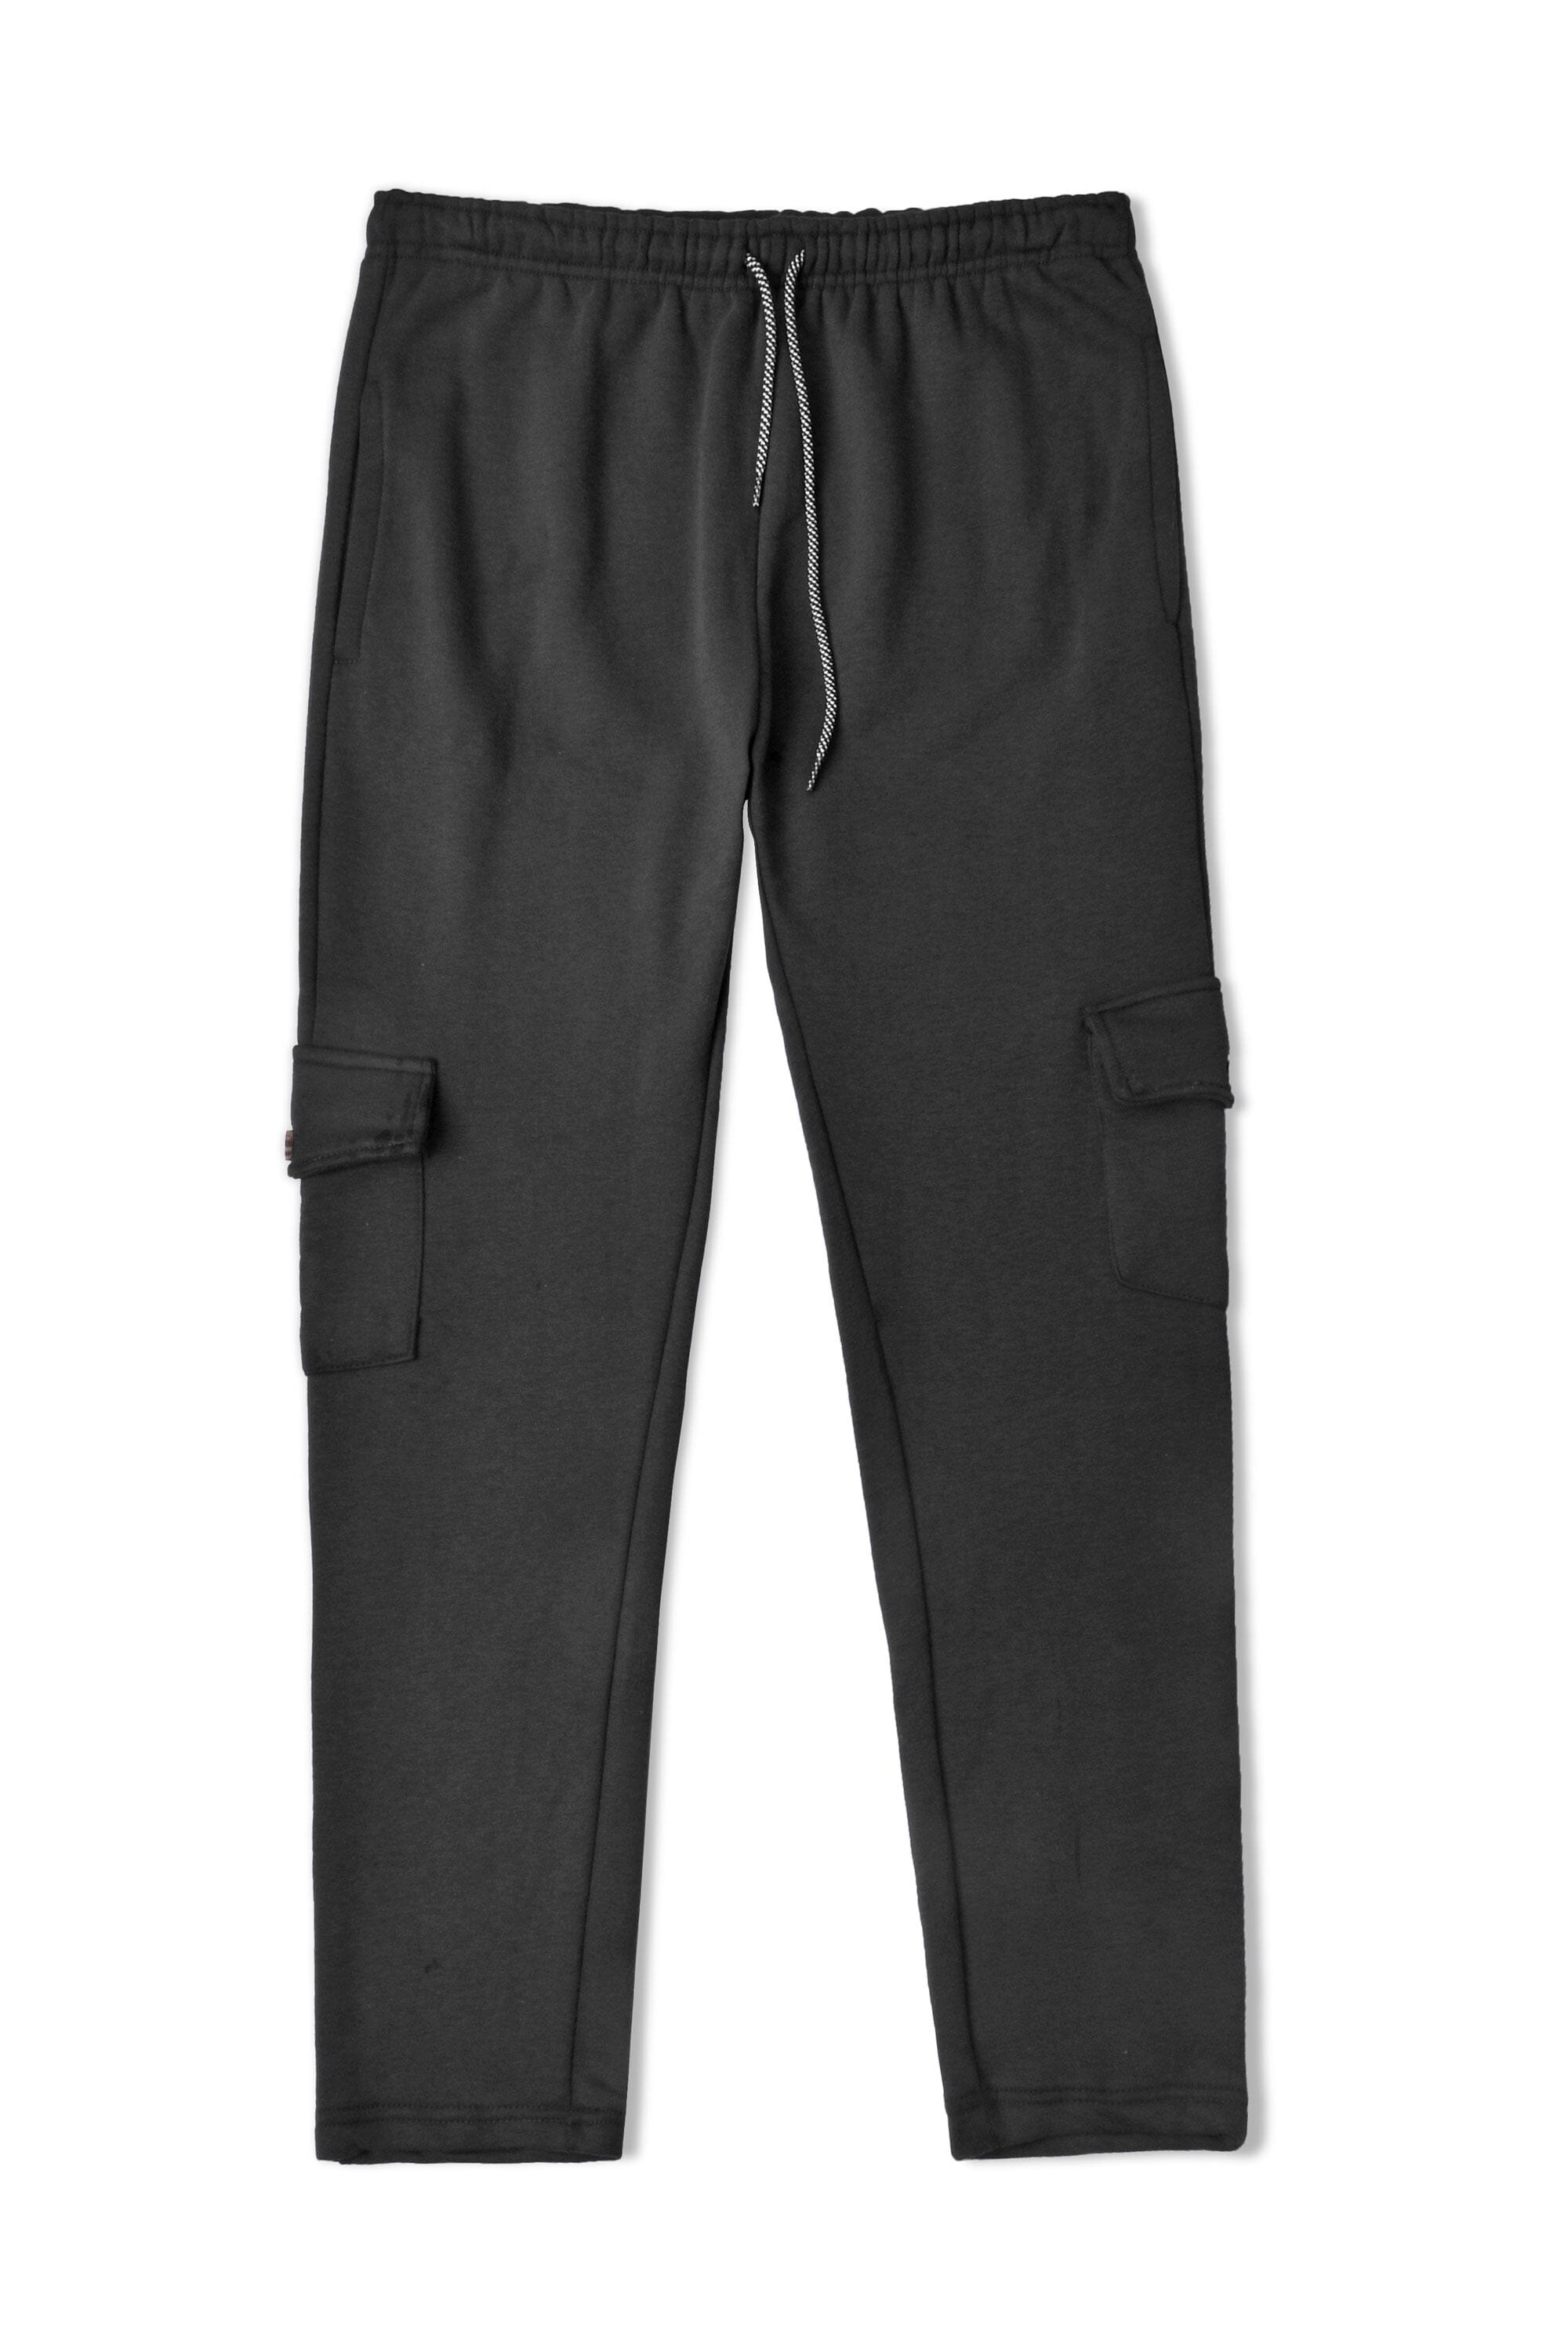 Buy Emporio Armani Men's Loungewear Pants, Black, Medium at Amazon.in